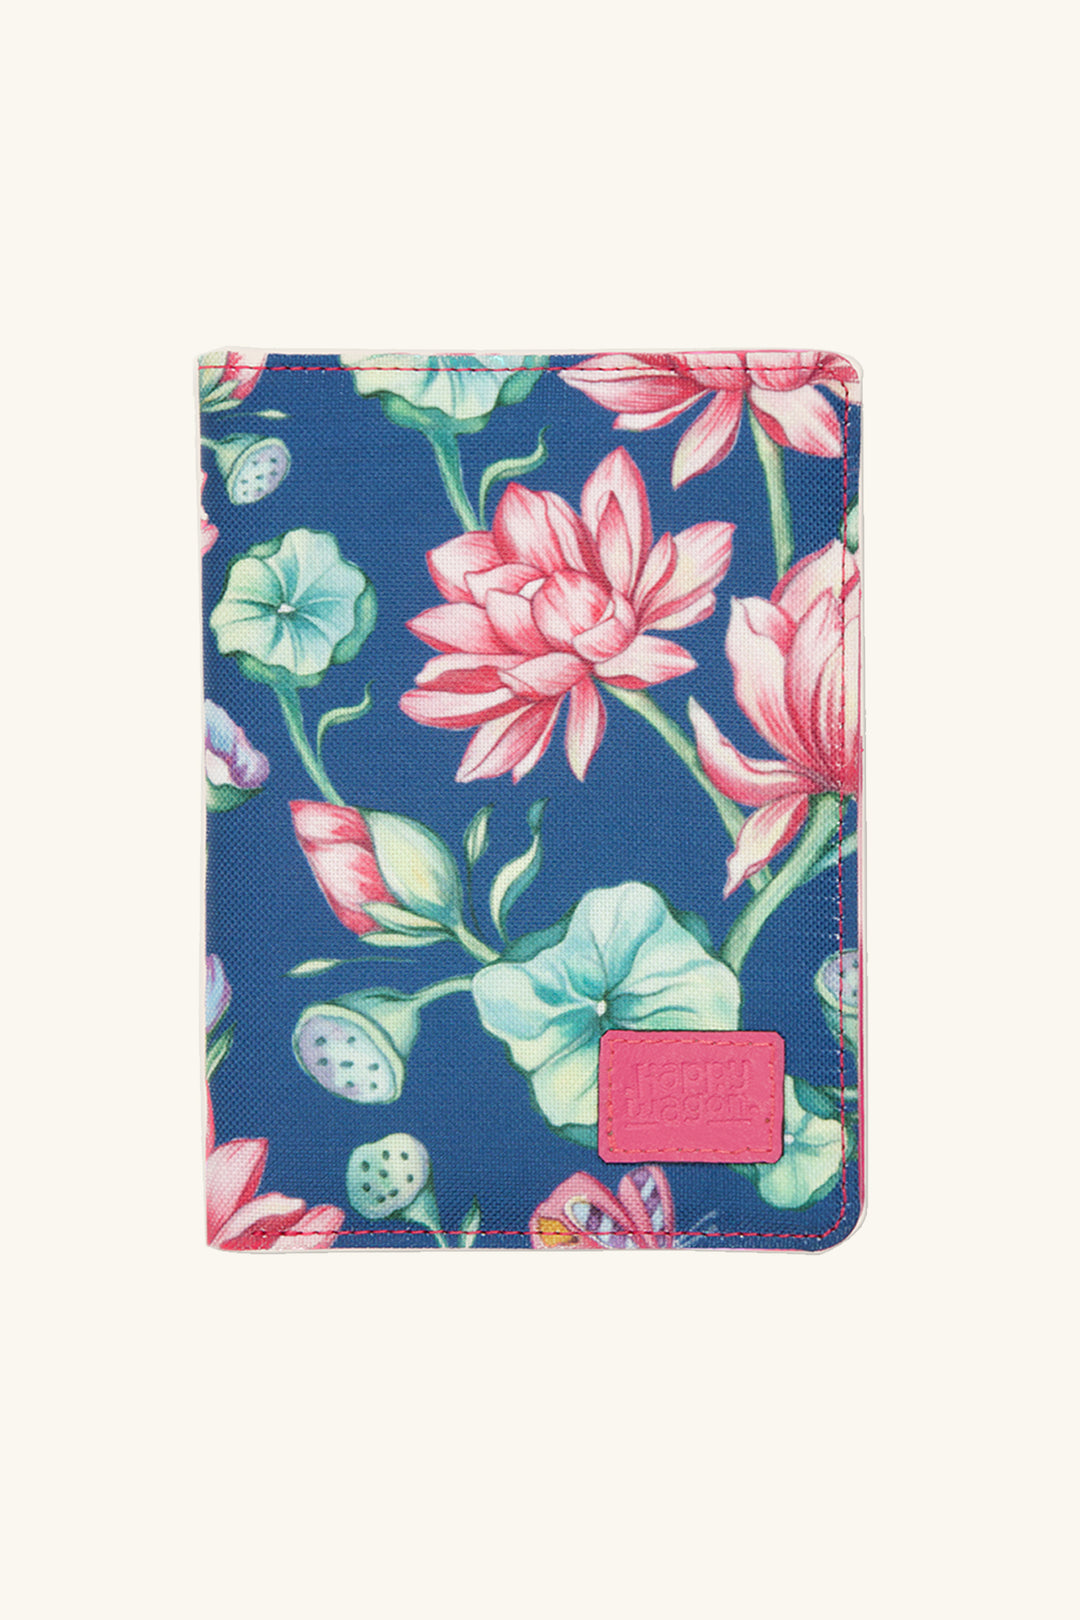 Lotus Bloom | Passport Sleeve